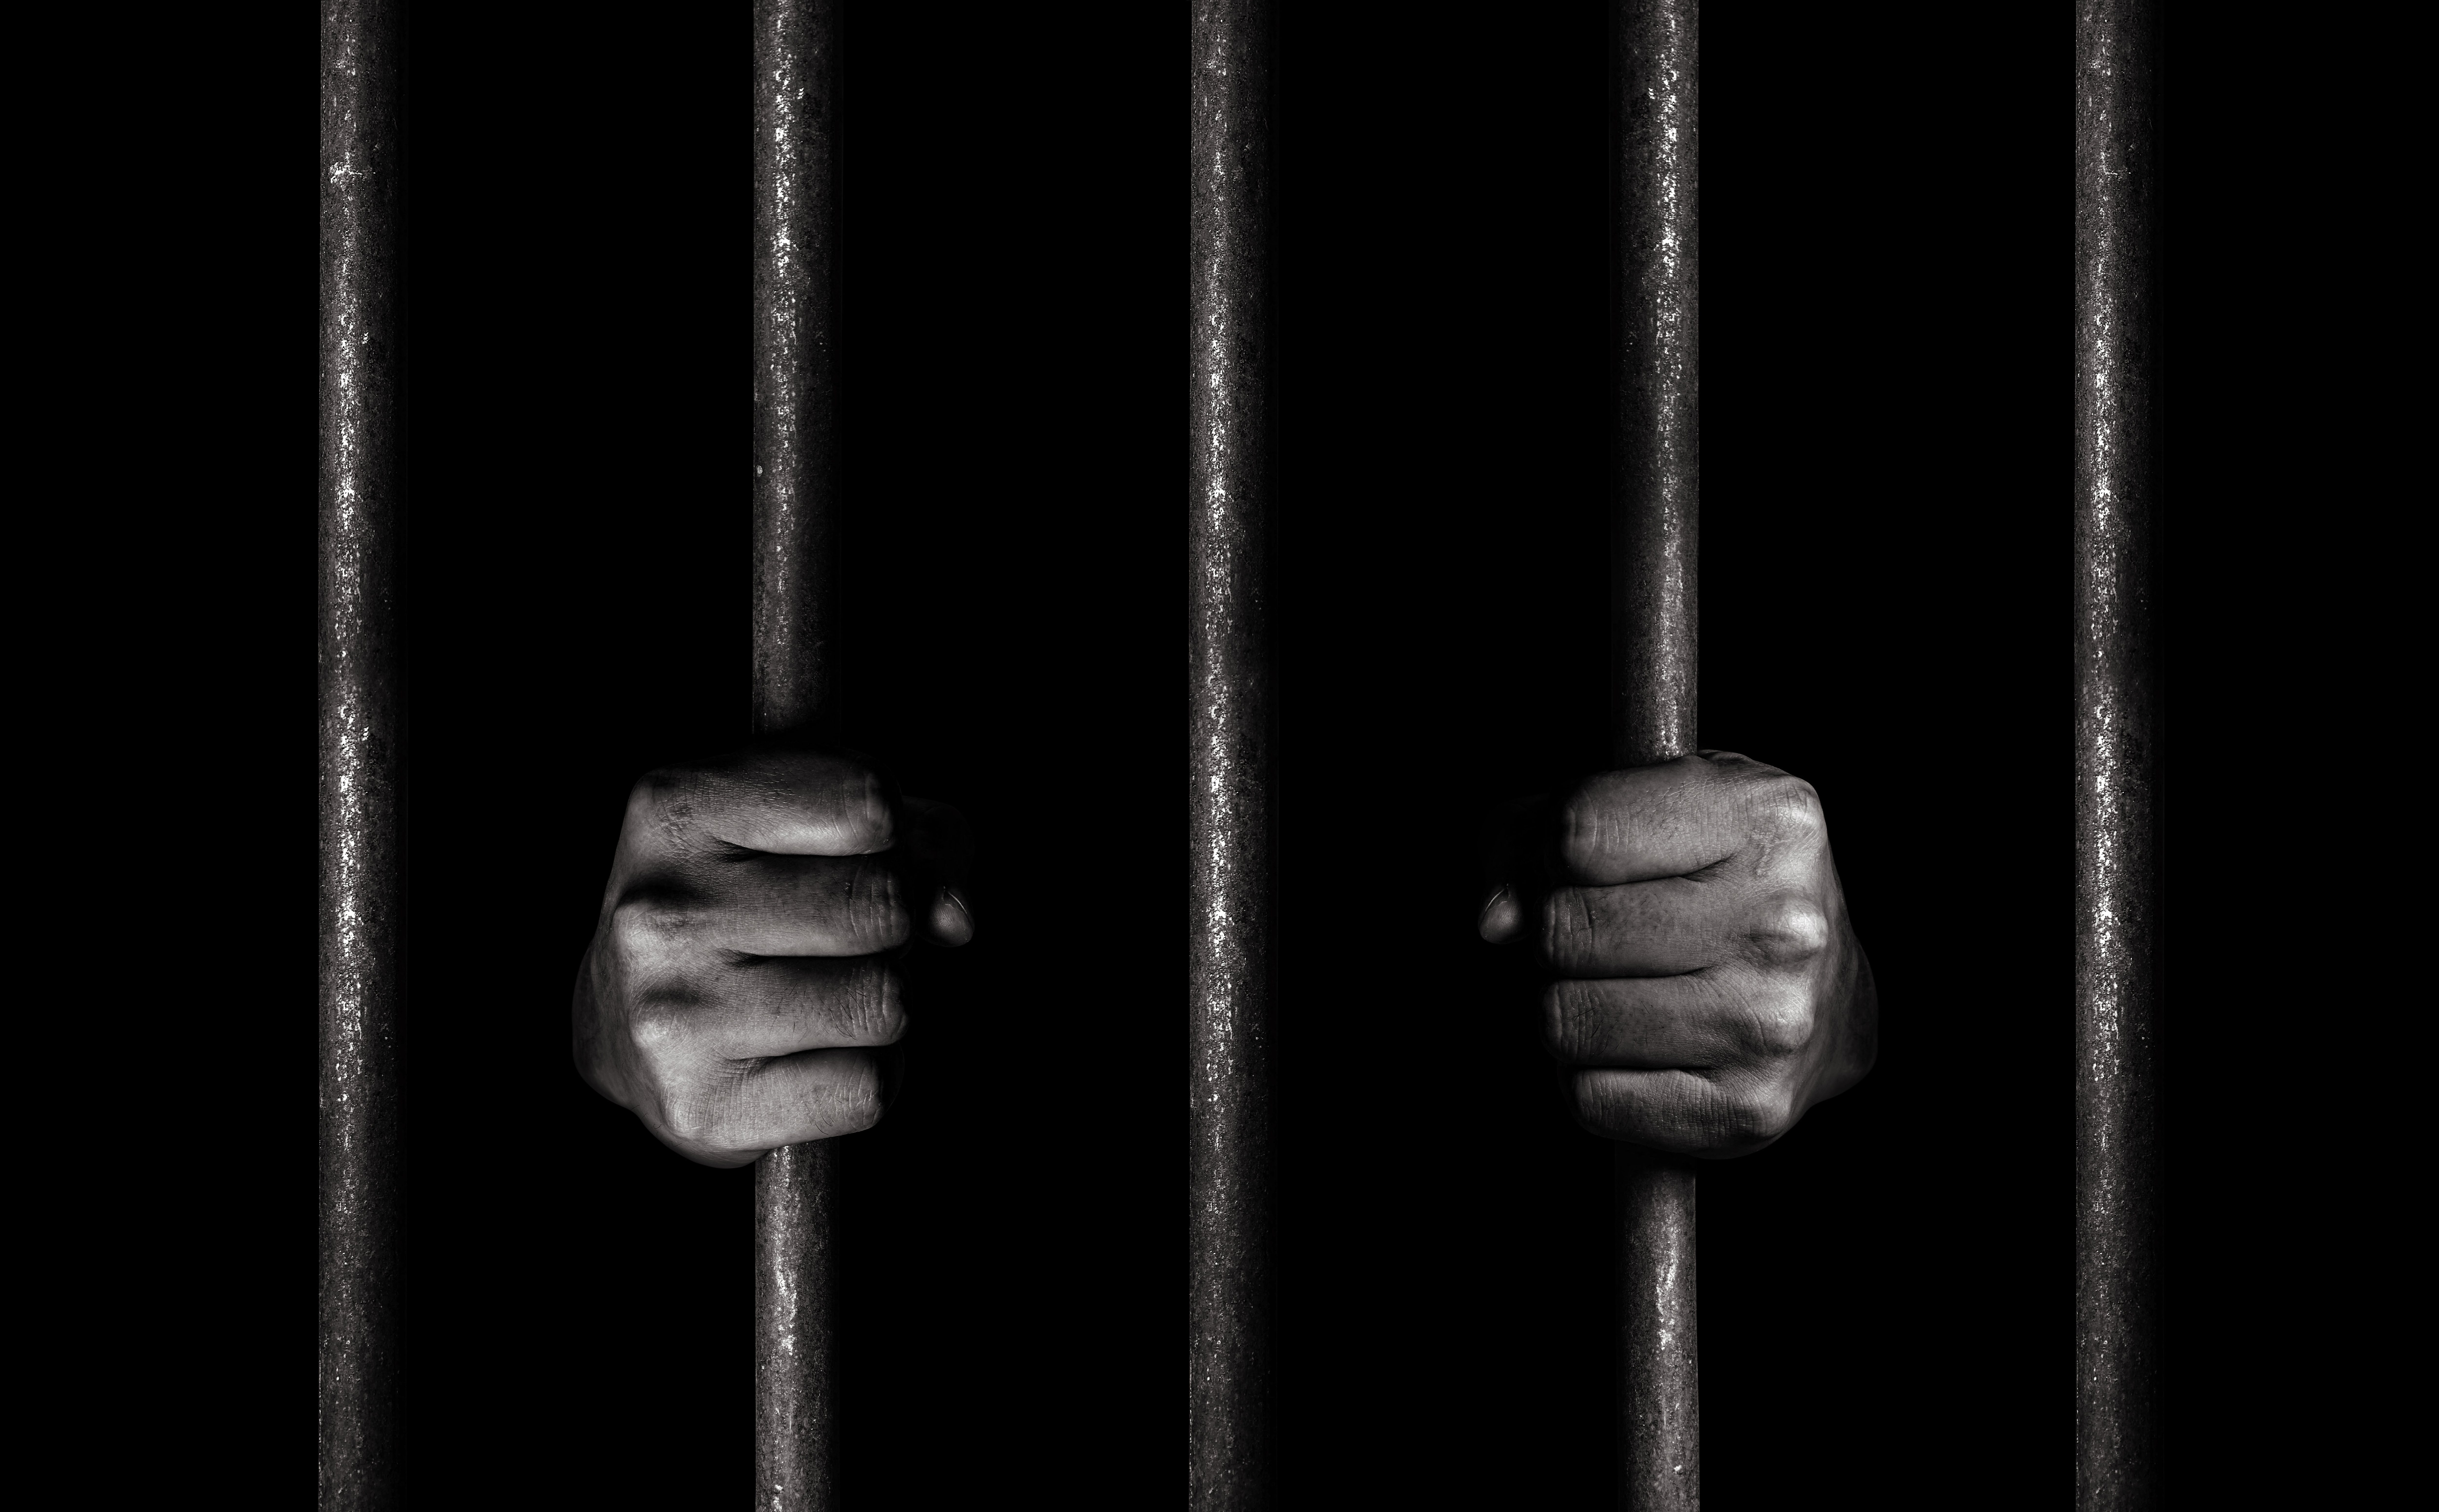 Hands of Blacc prisoner grabbing bars